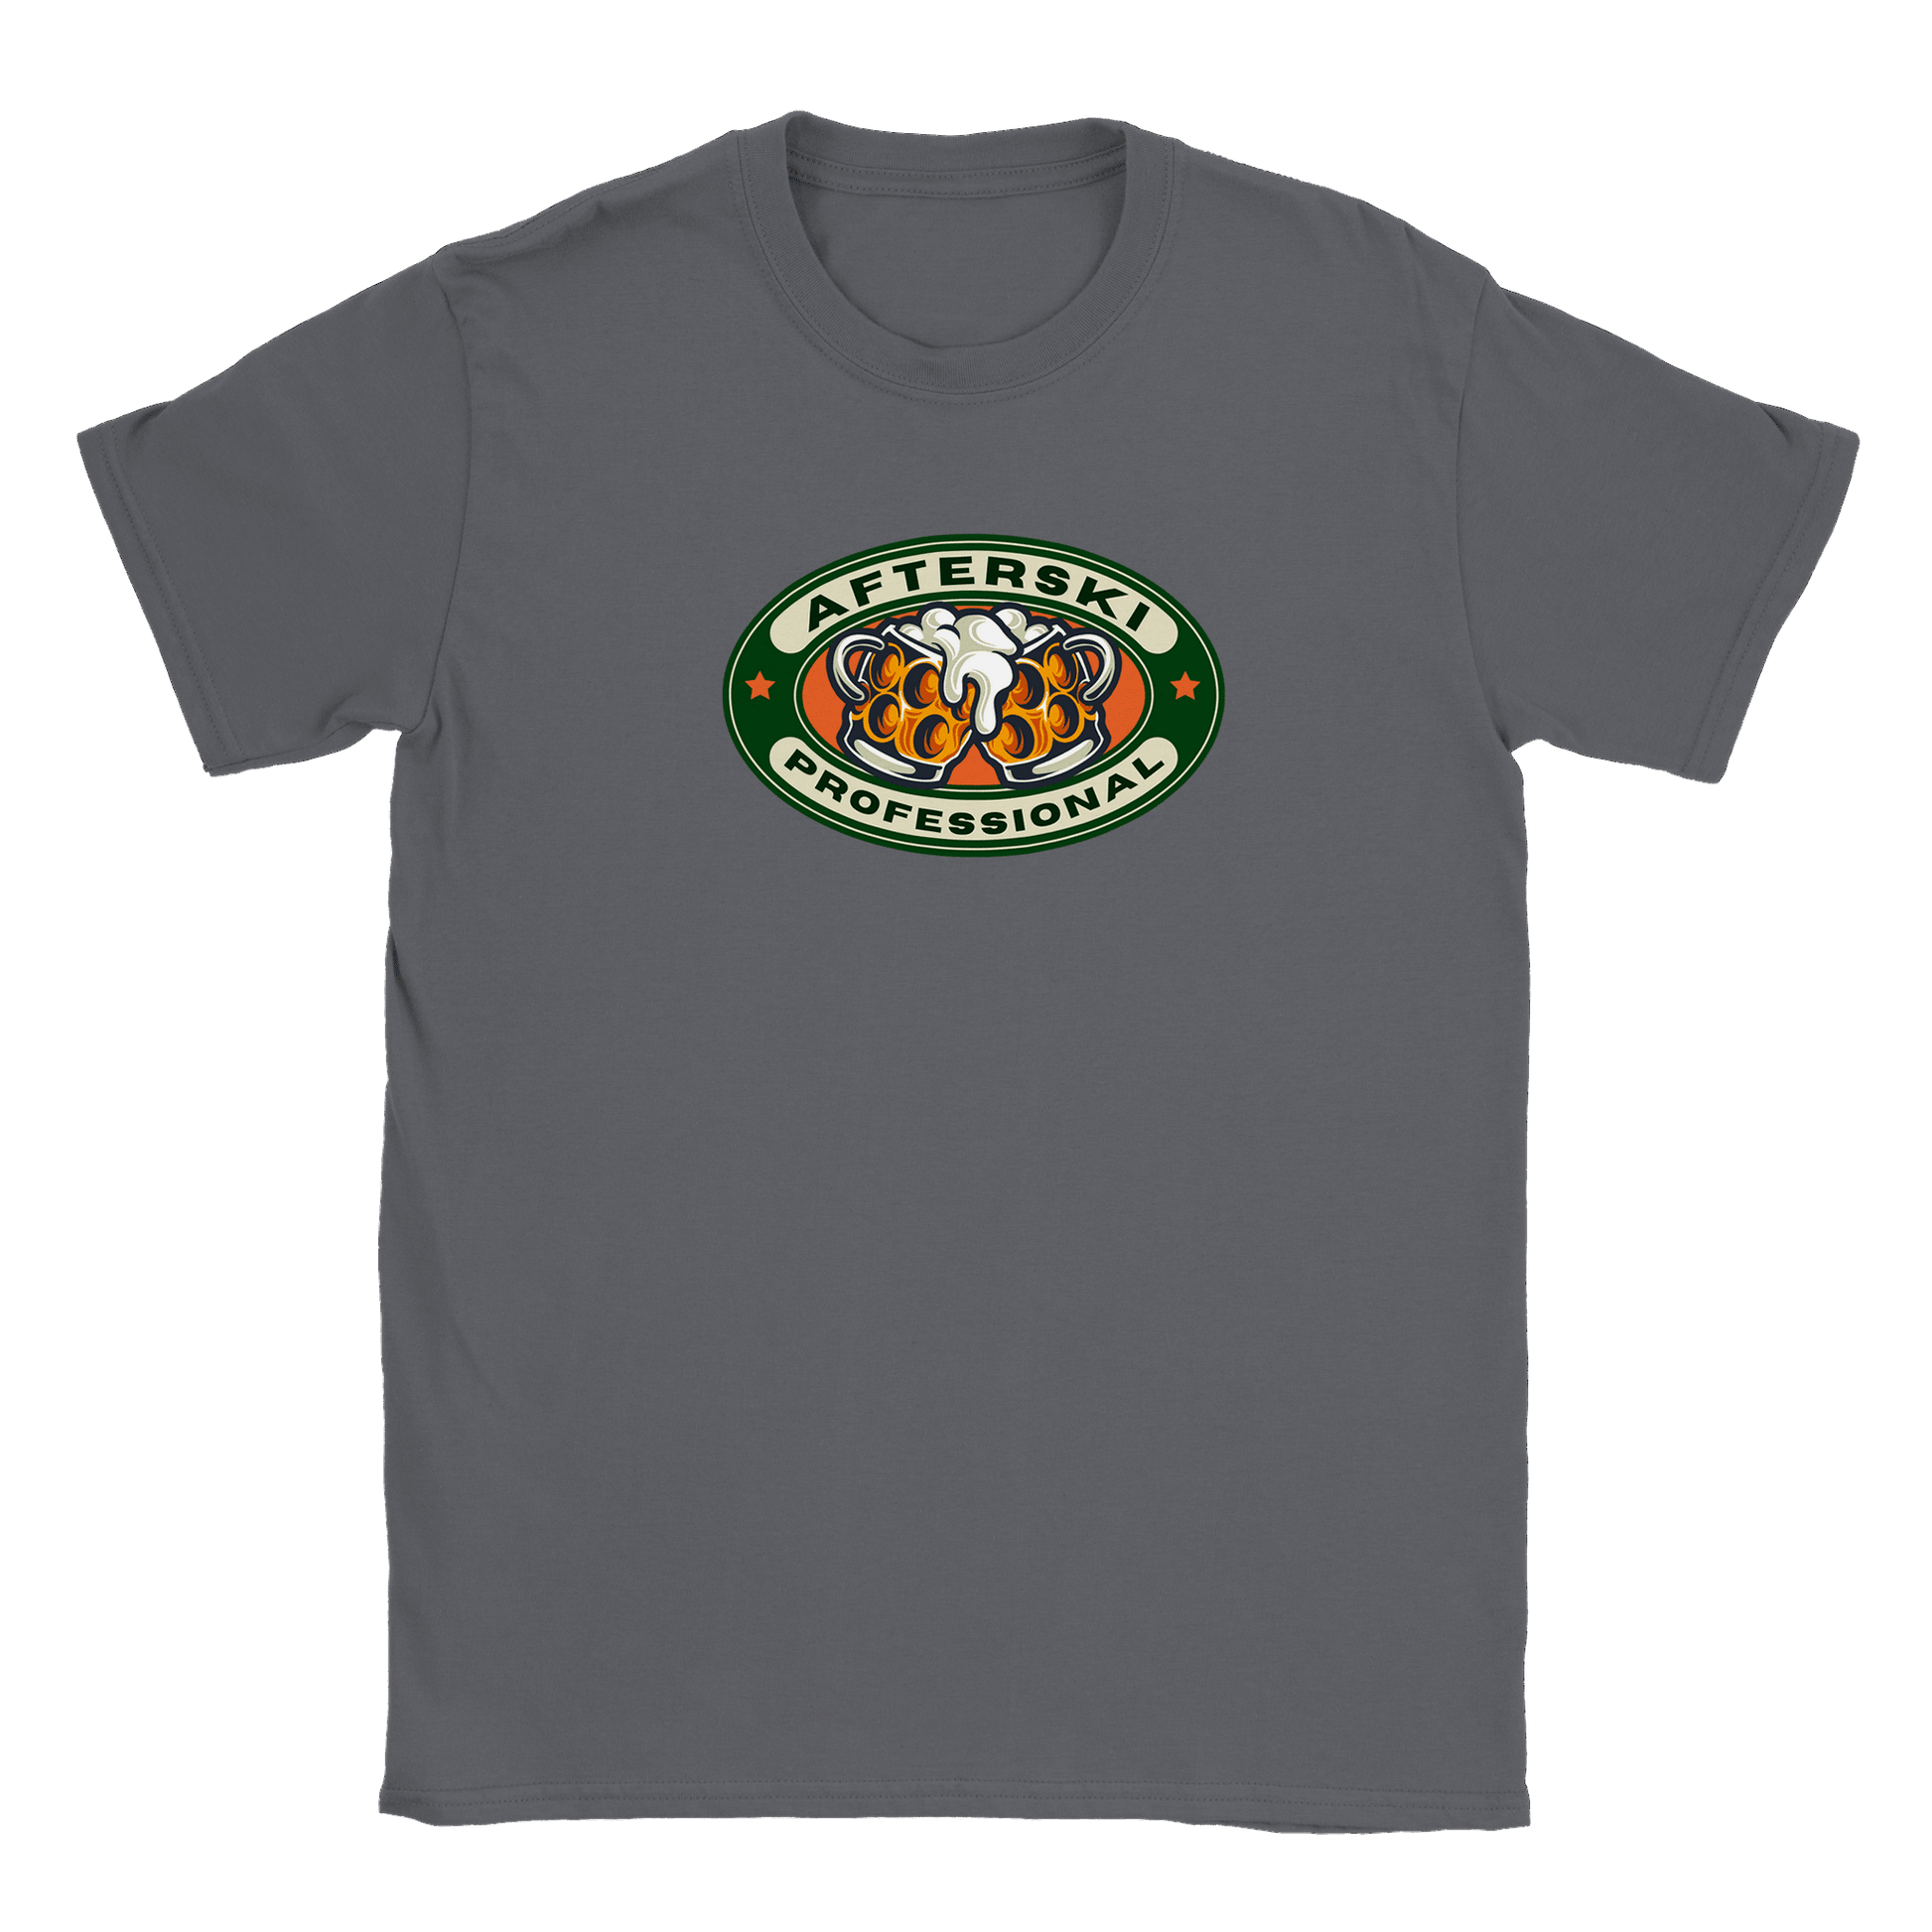 Afterski Professional - T-shirt Charcoal